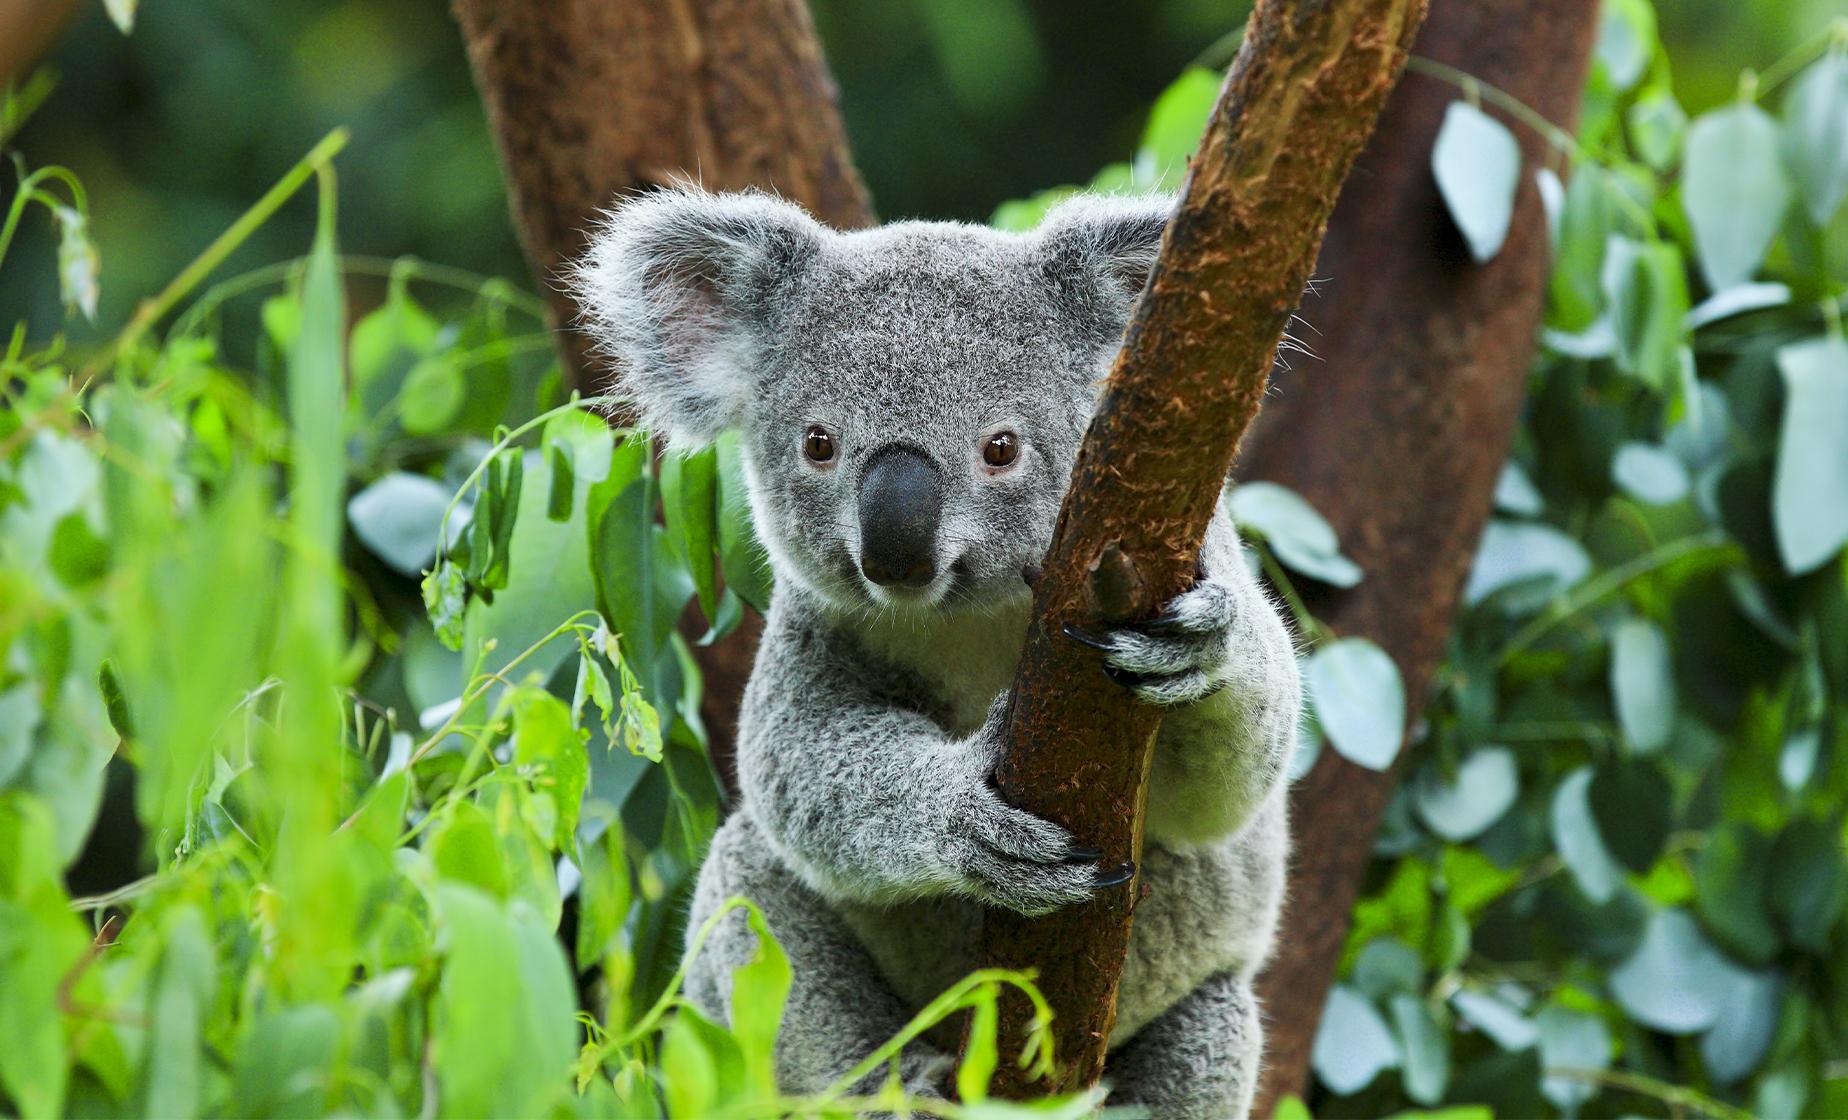 brisbane river cruise koala sanctuary